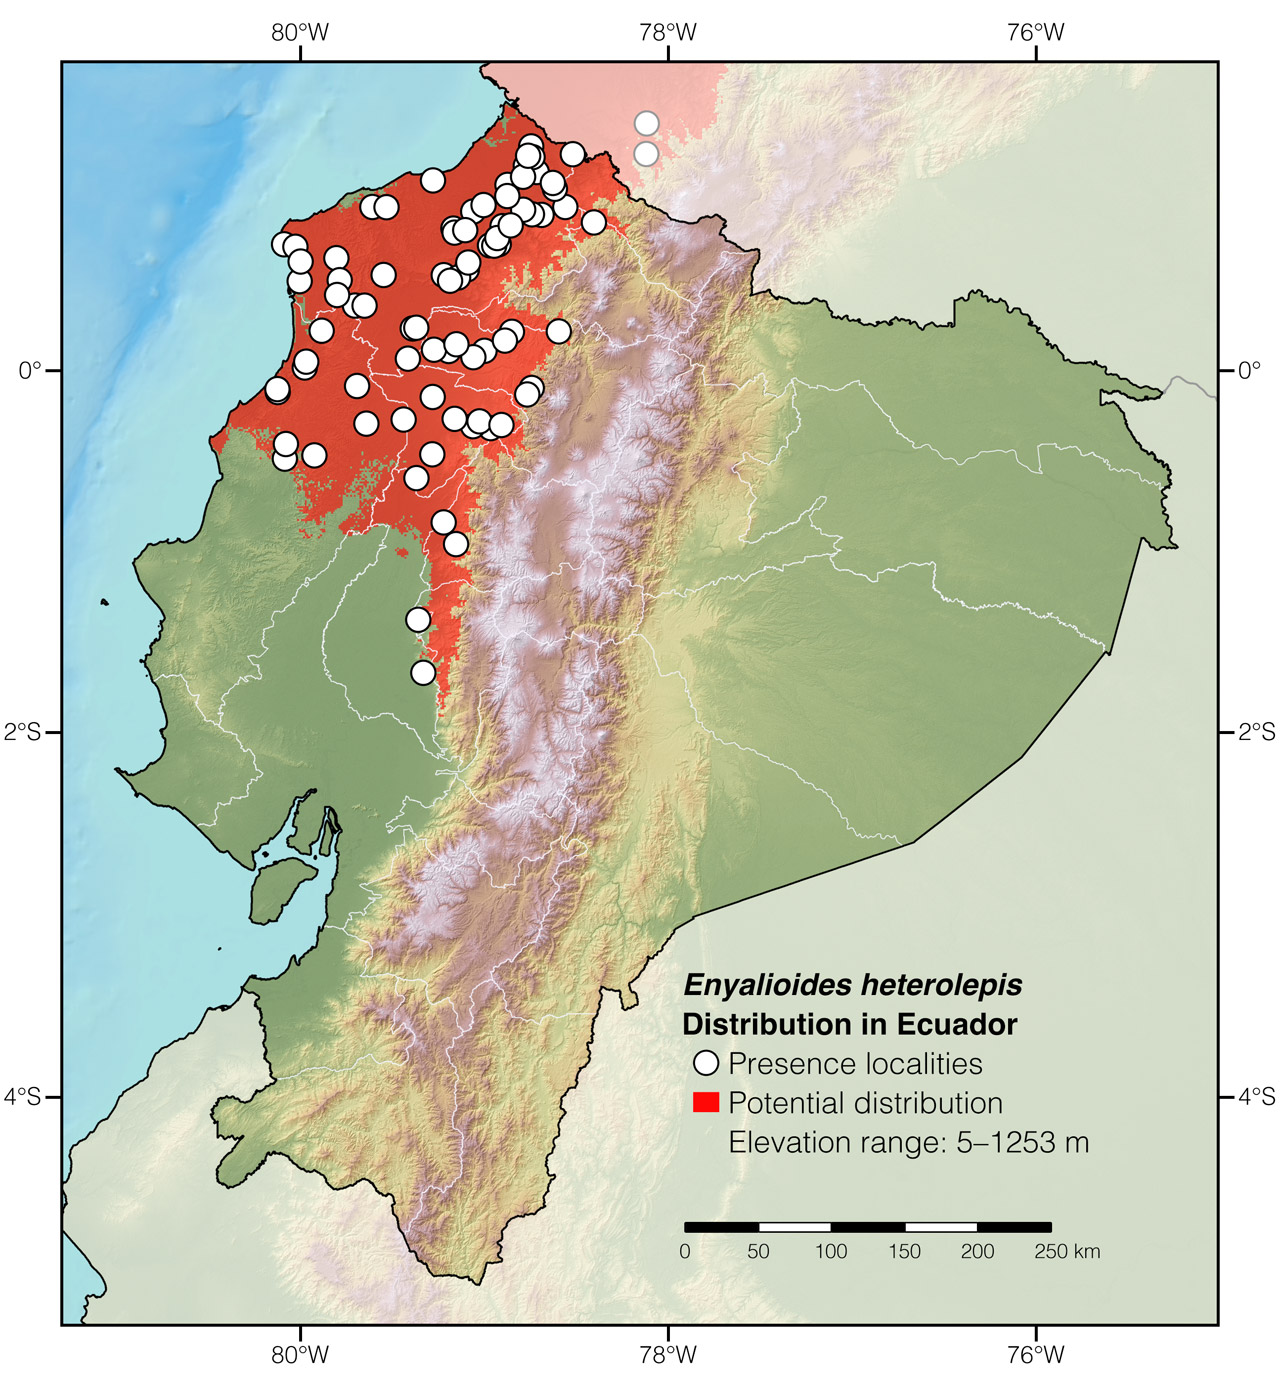 Distribution of Enyalioides laticeps in Ecuador